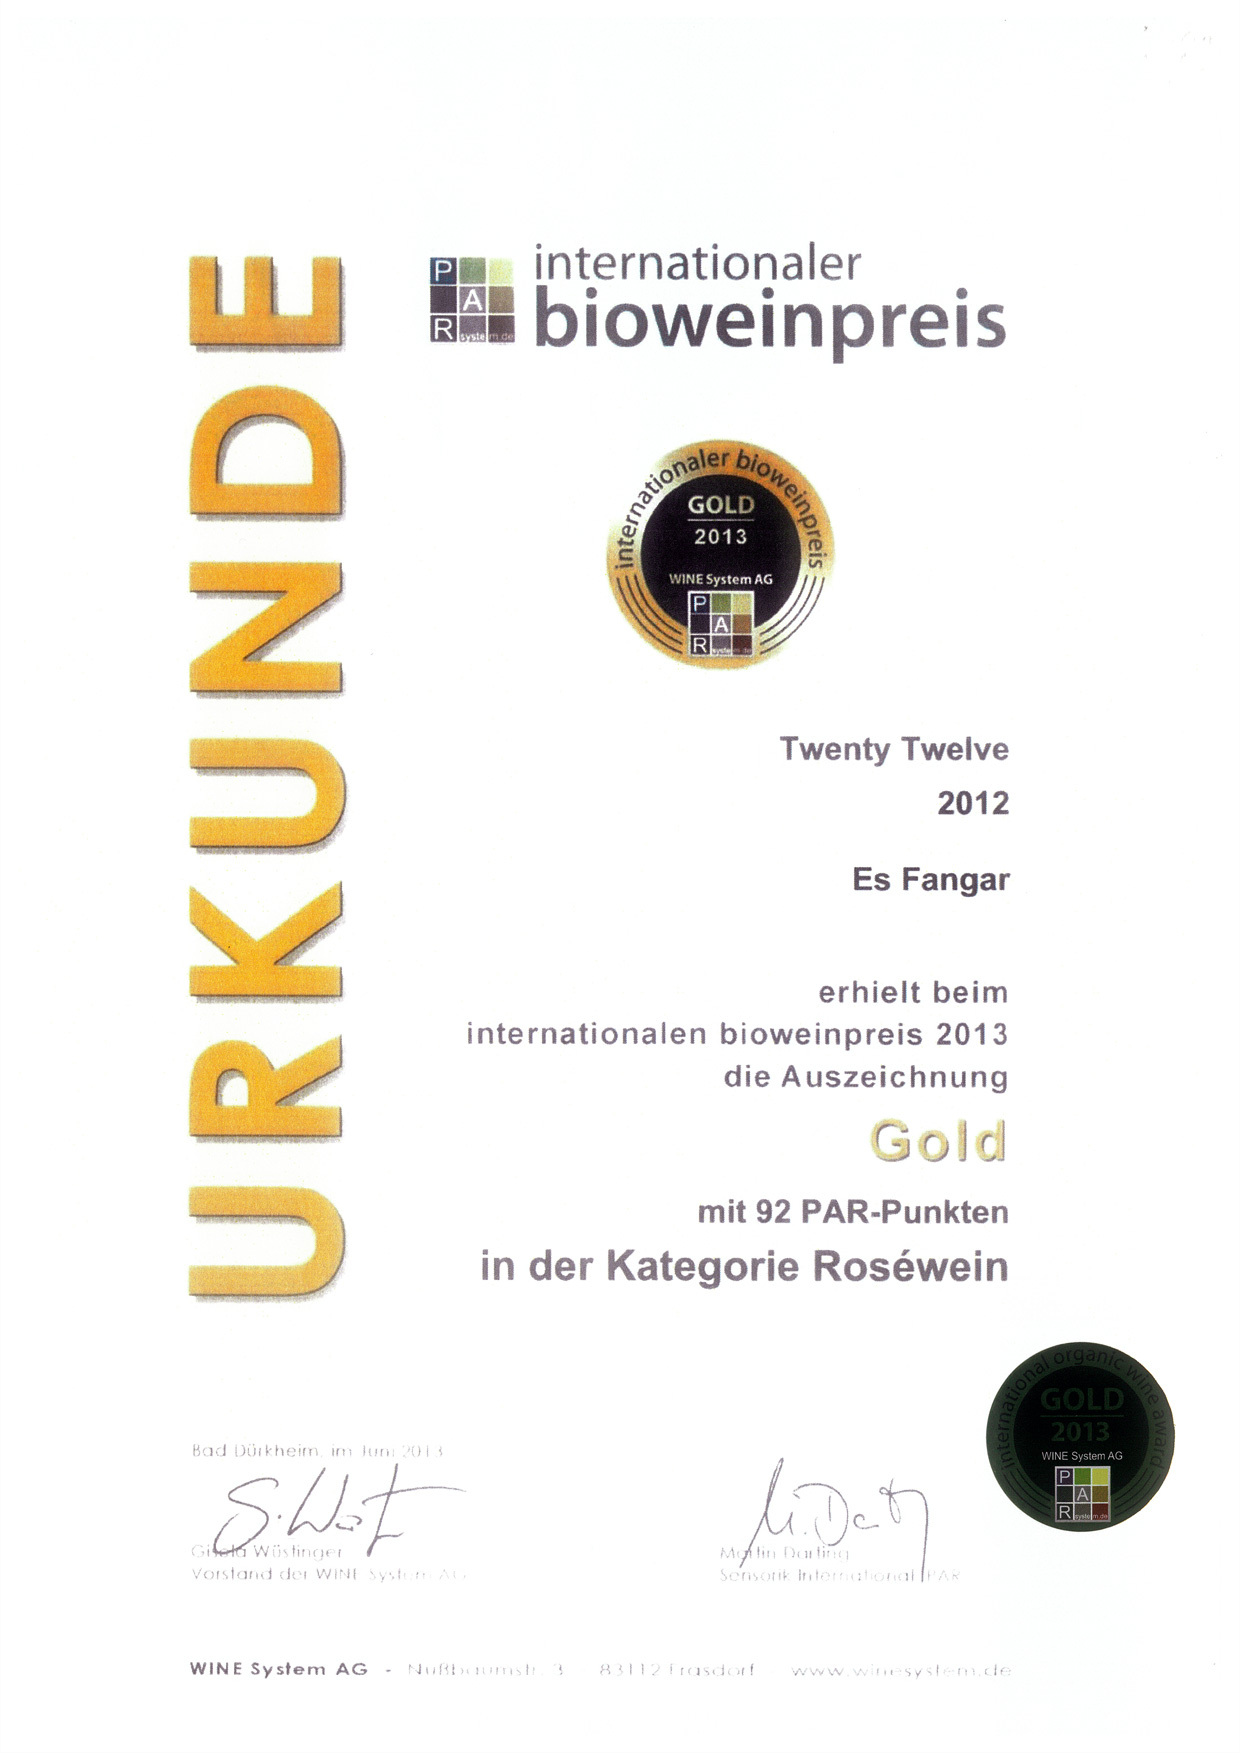 InternatBioweinpreis2013-Gold_TwentyTwelve2012